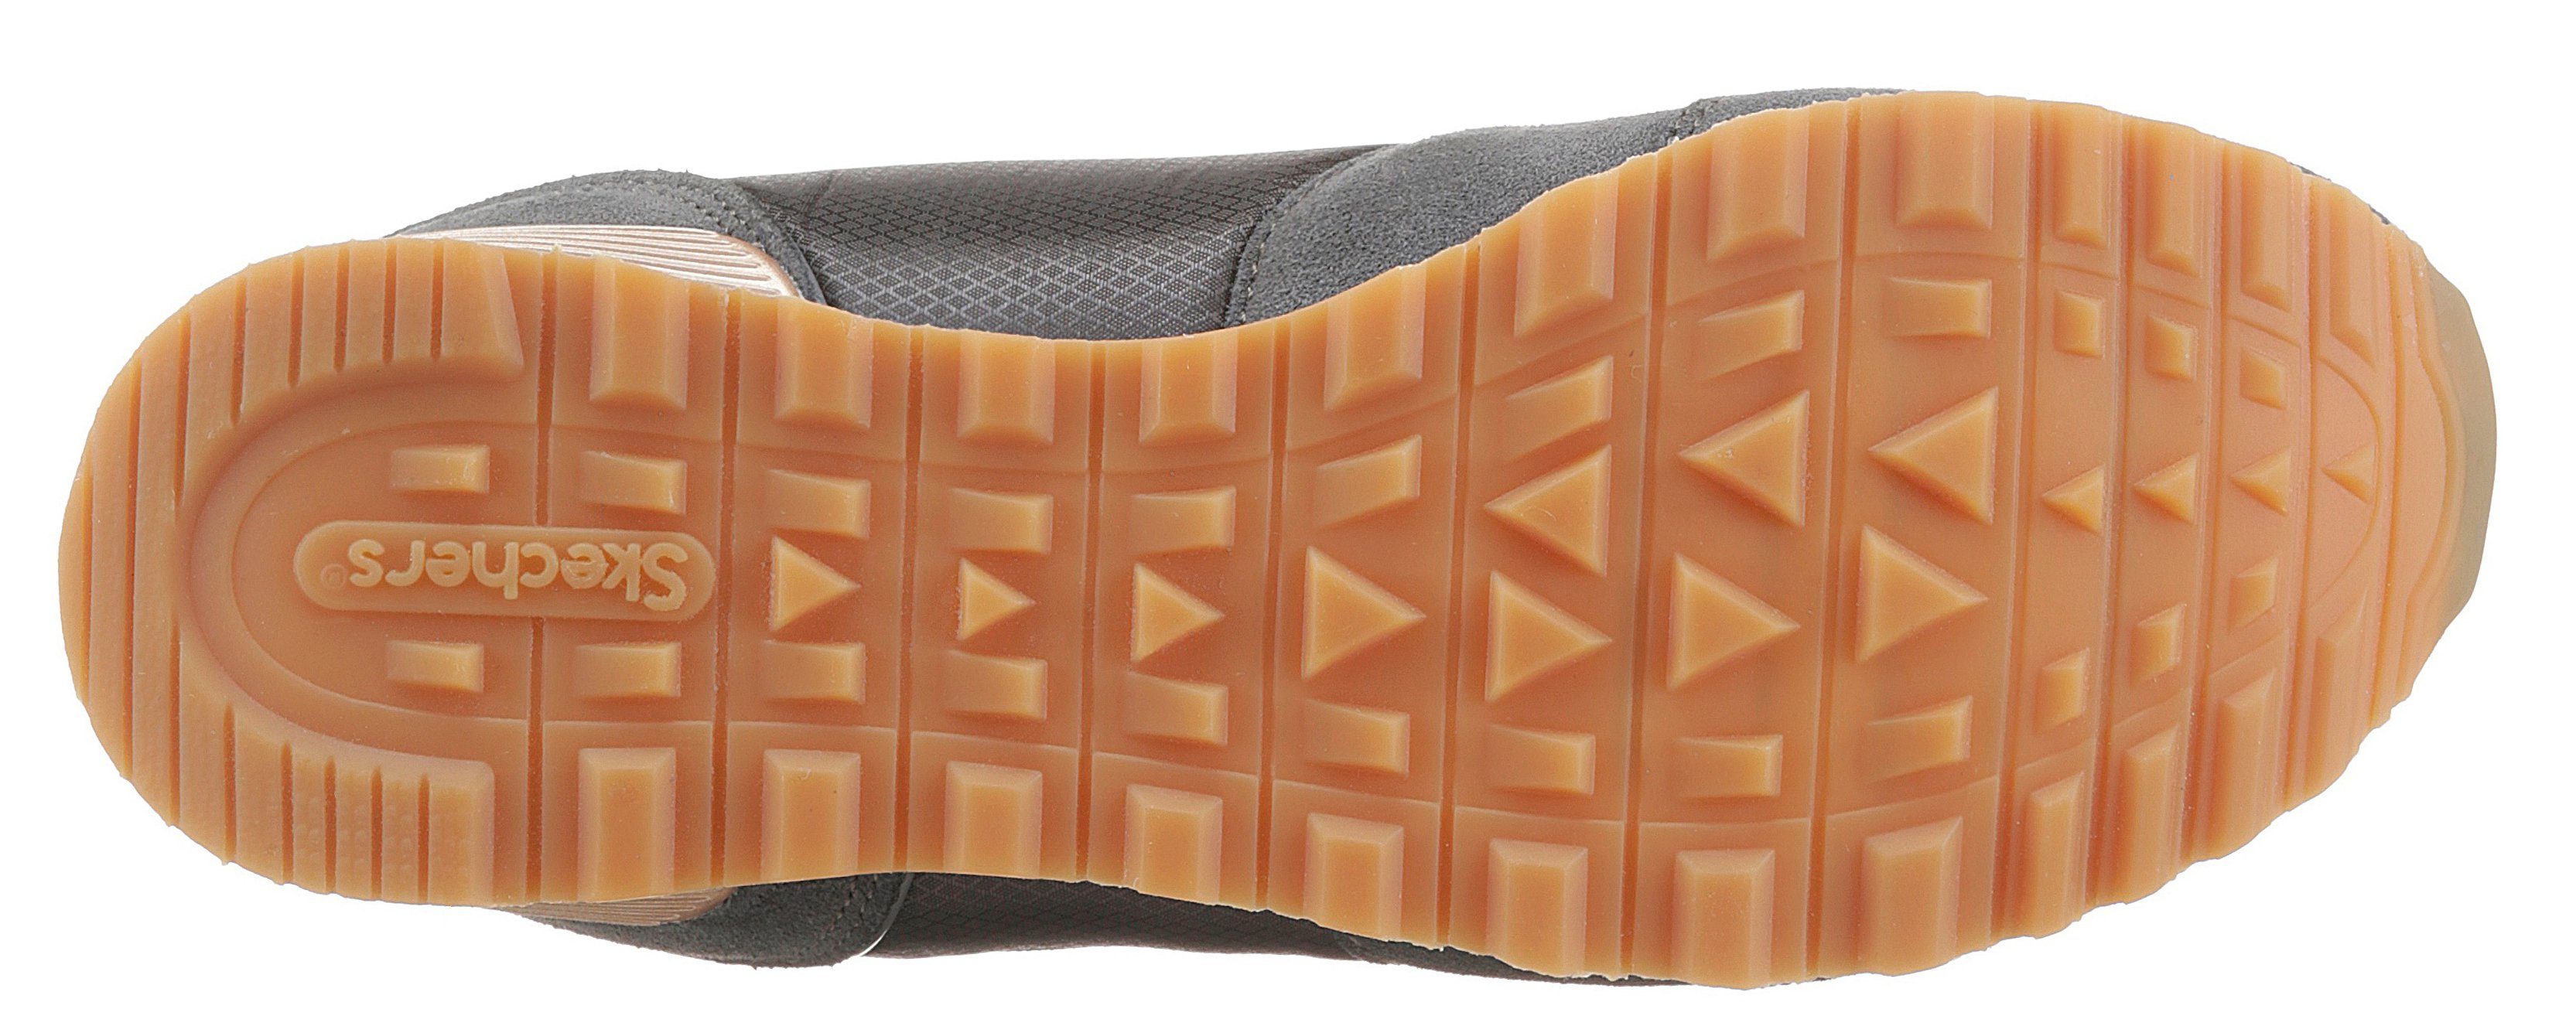 - Memory komfortabler Ausstattung OG Air-Cooled 85 Sneaker GURL mit grau Foam Skechers GOLDN